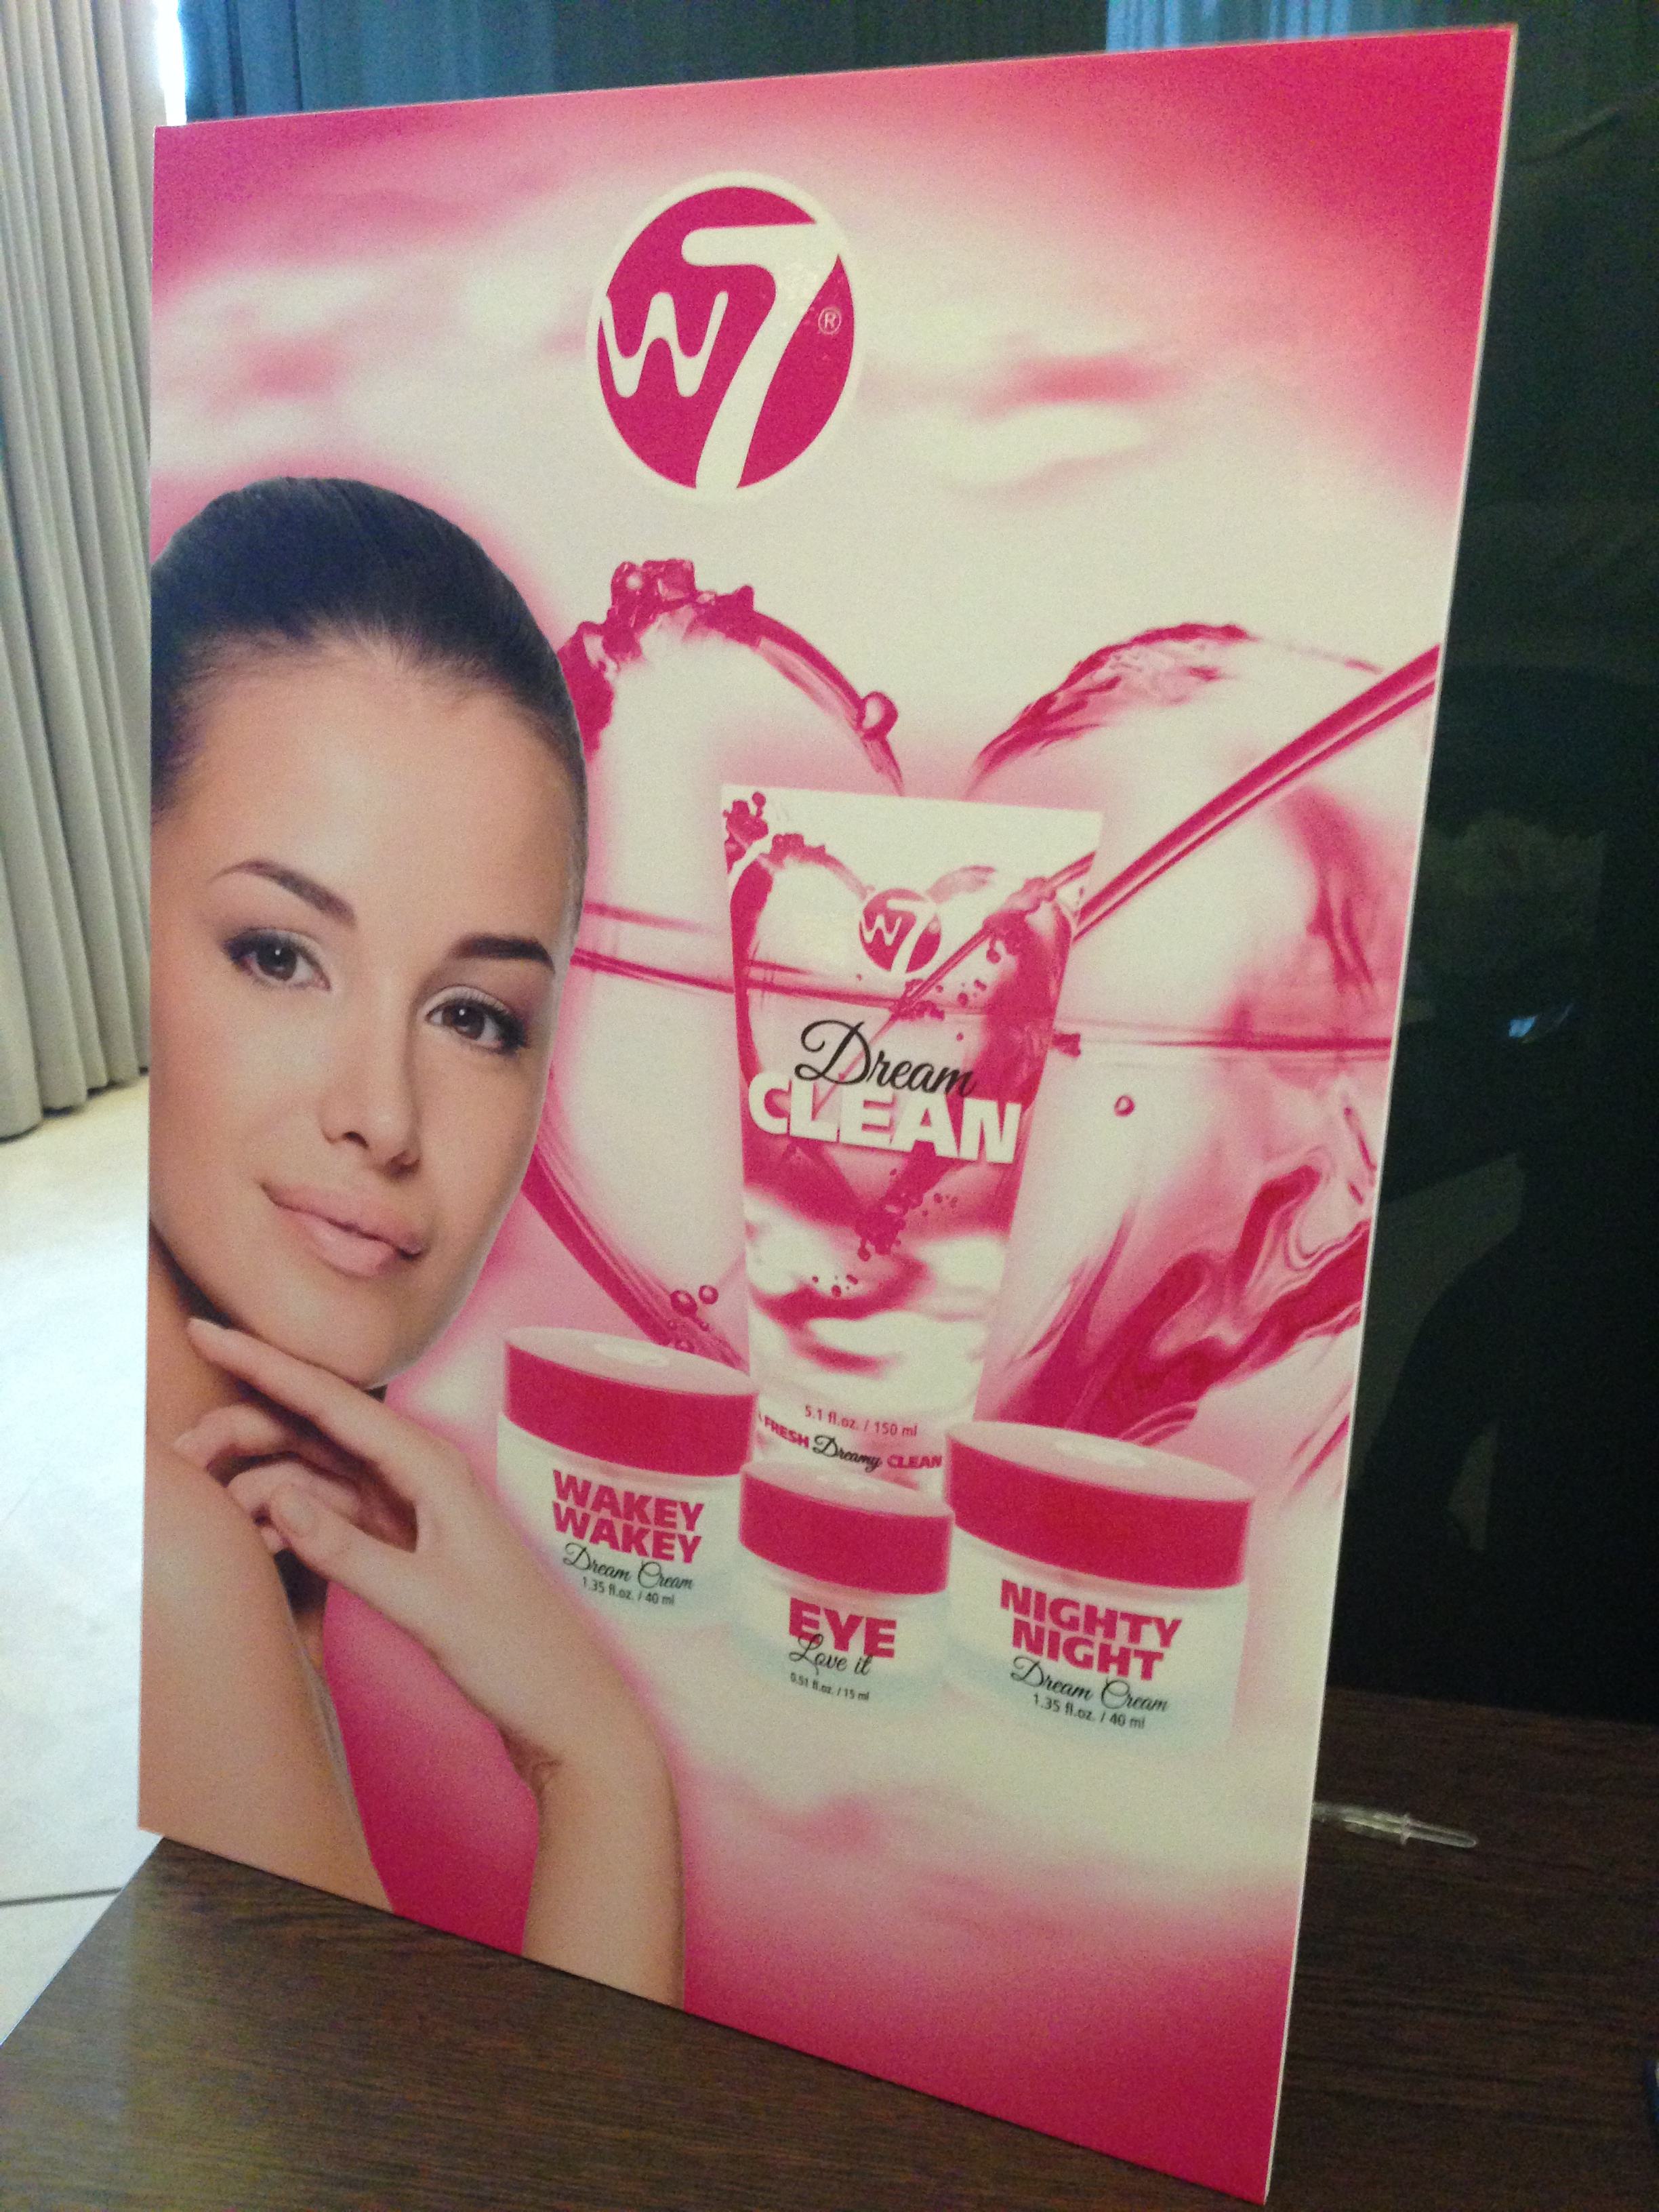 W7 Skincare Launch